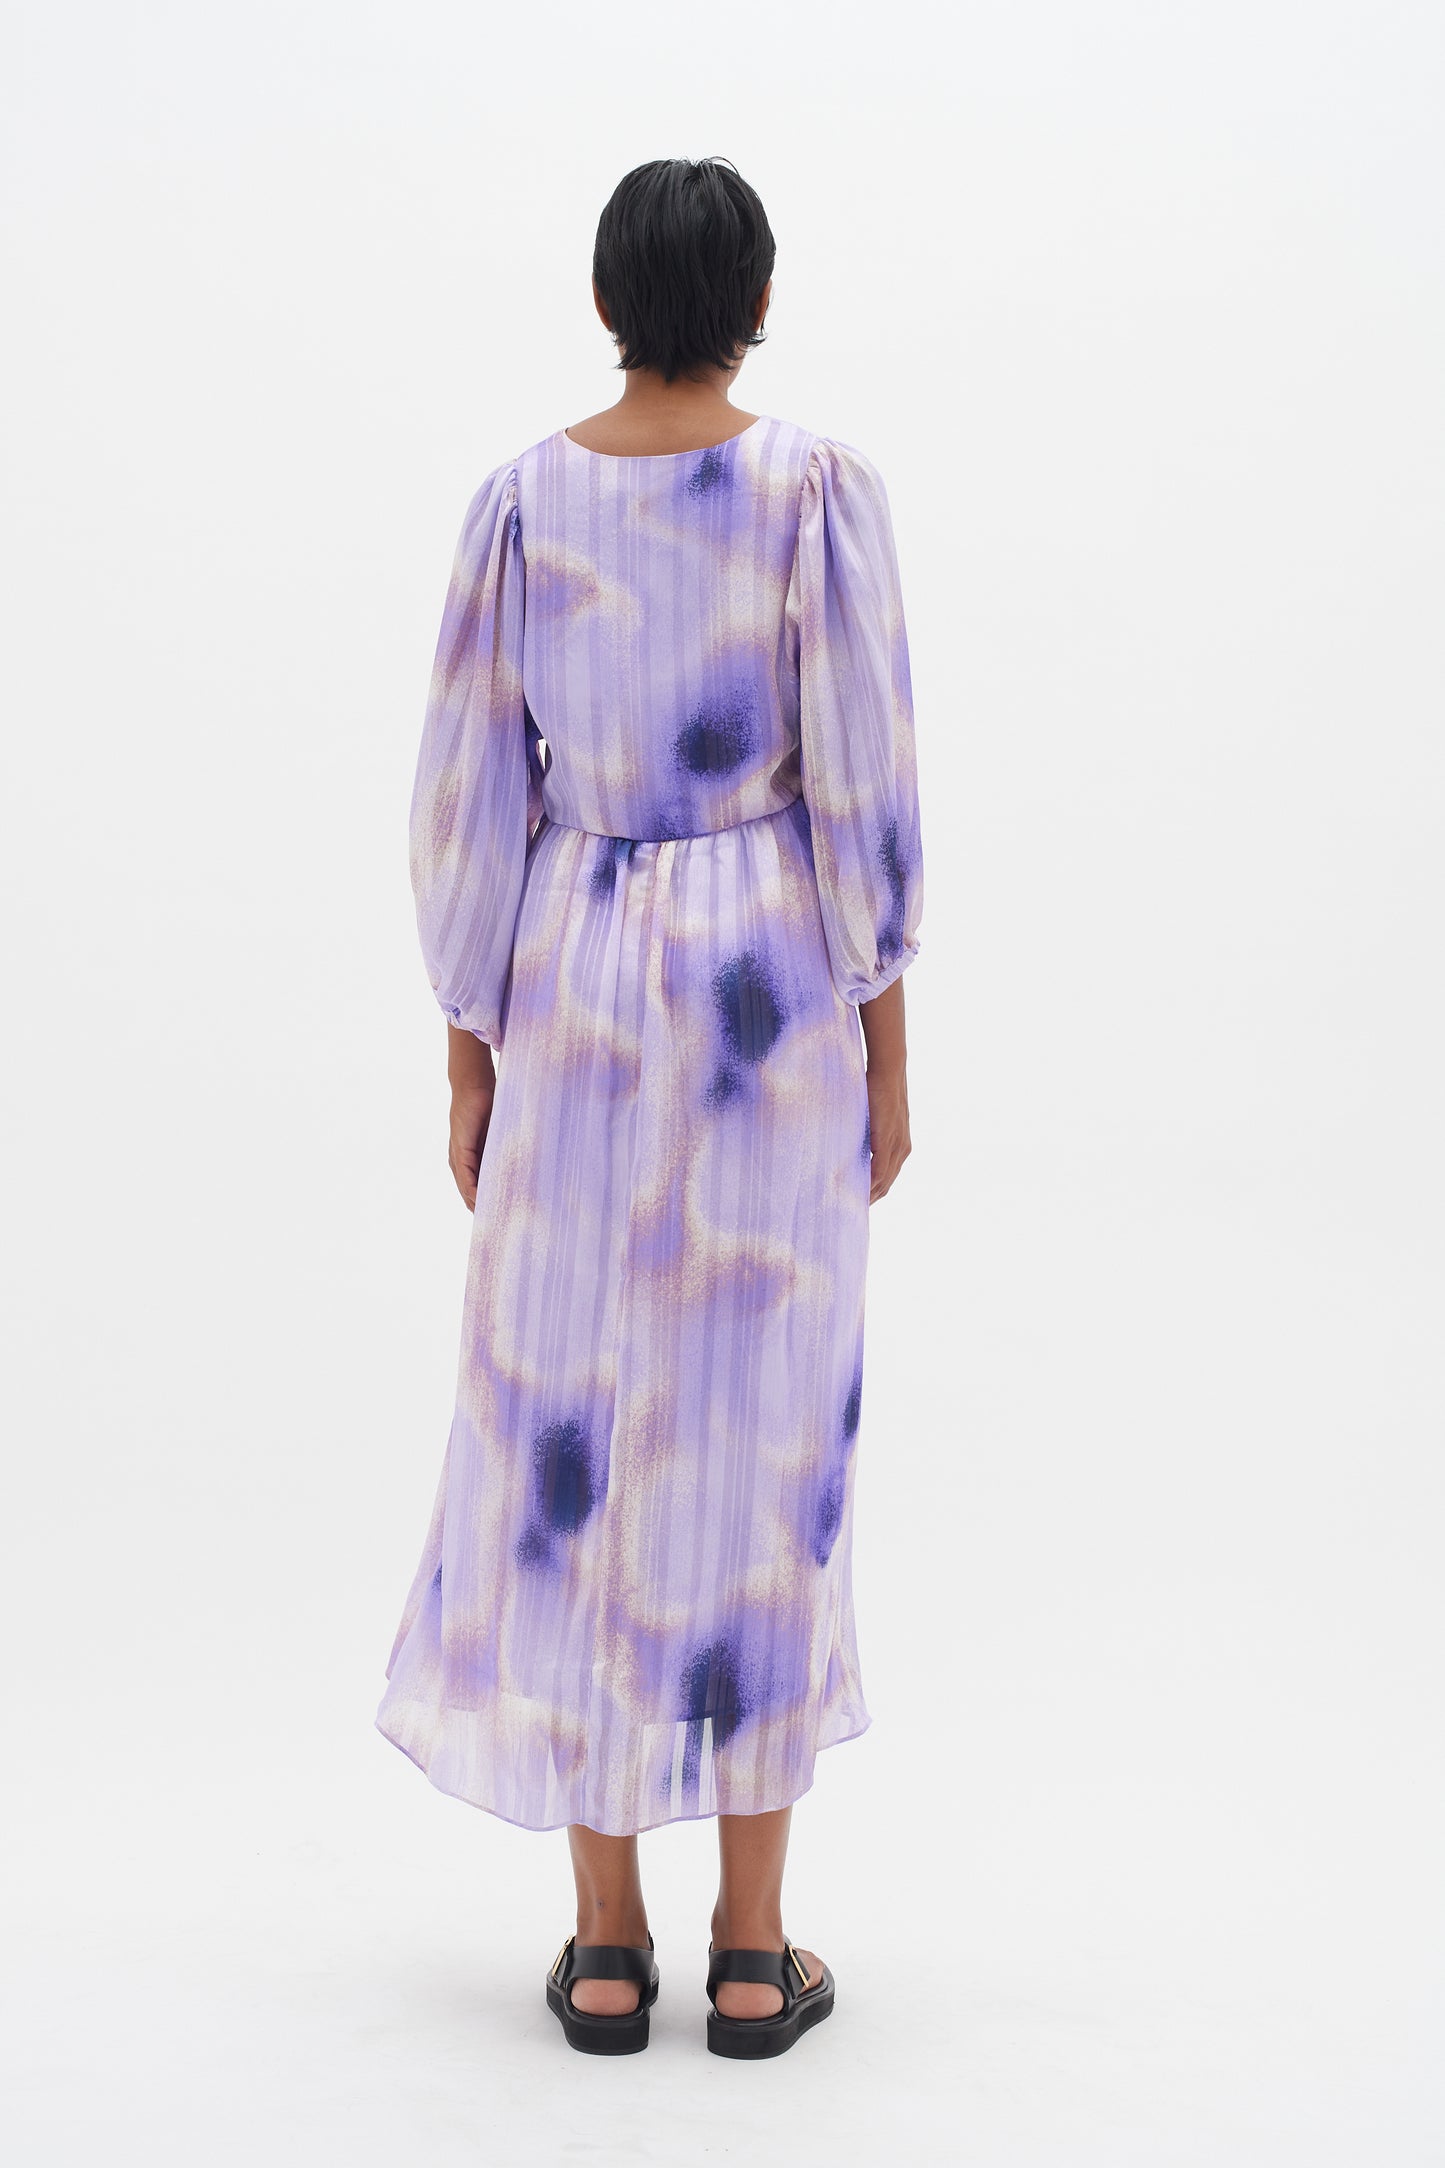 Himarilw Dress in Lavender